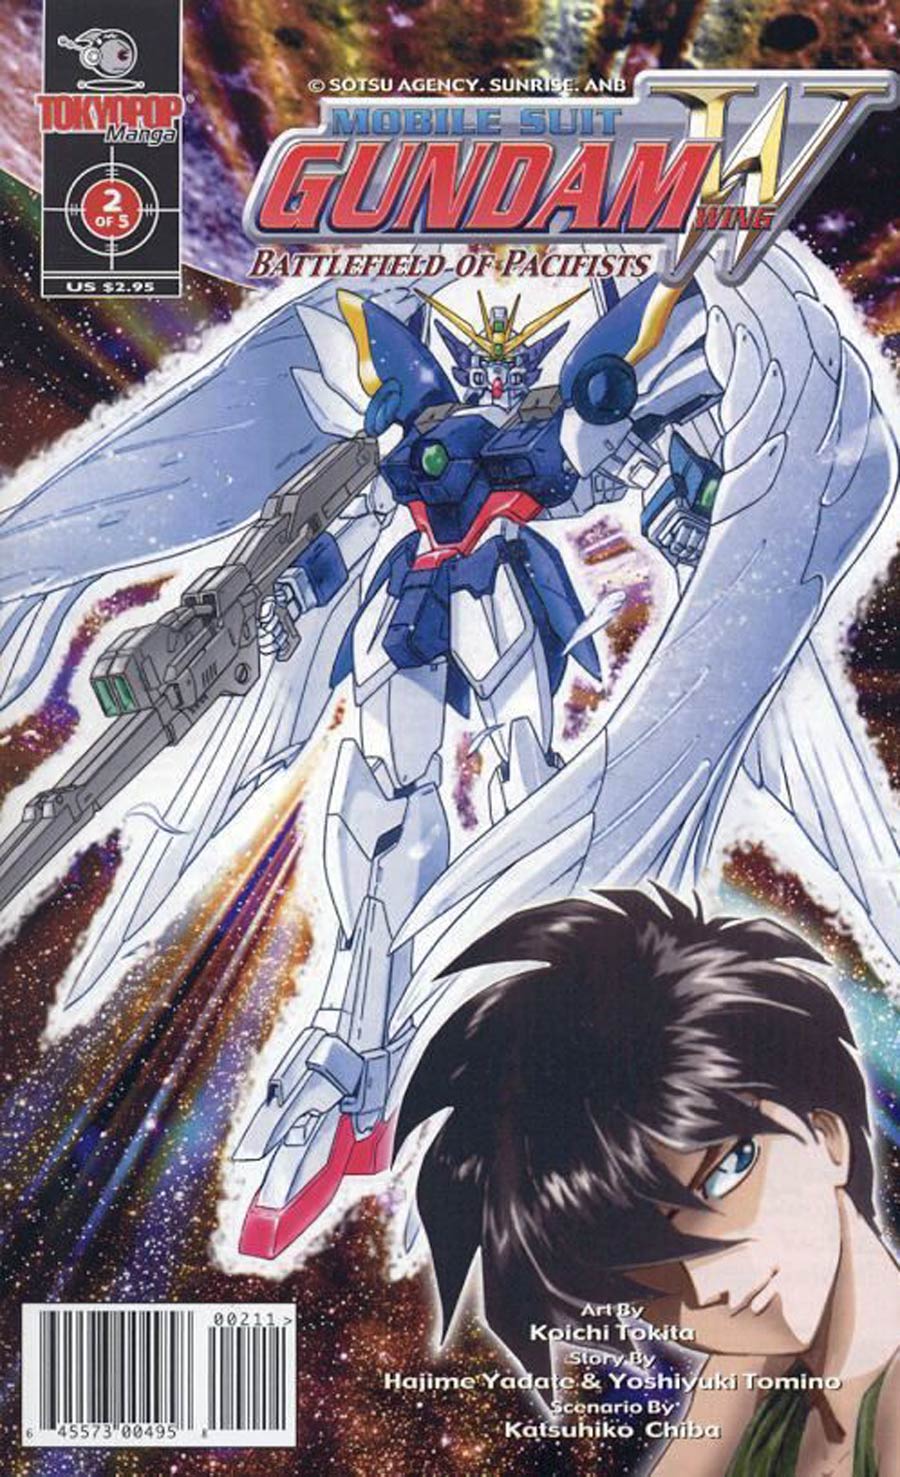 Gundam Wing Battlefield Of Pacifists #2